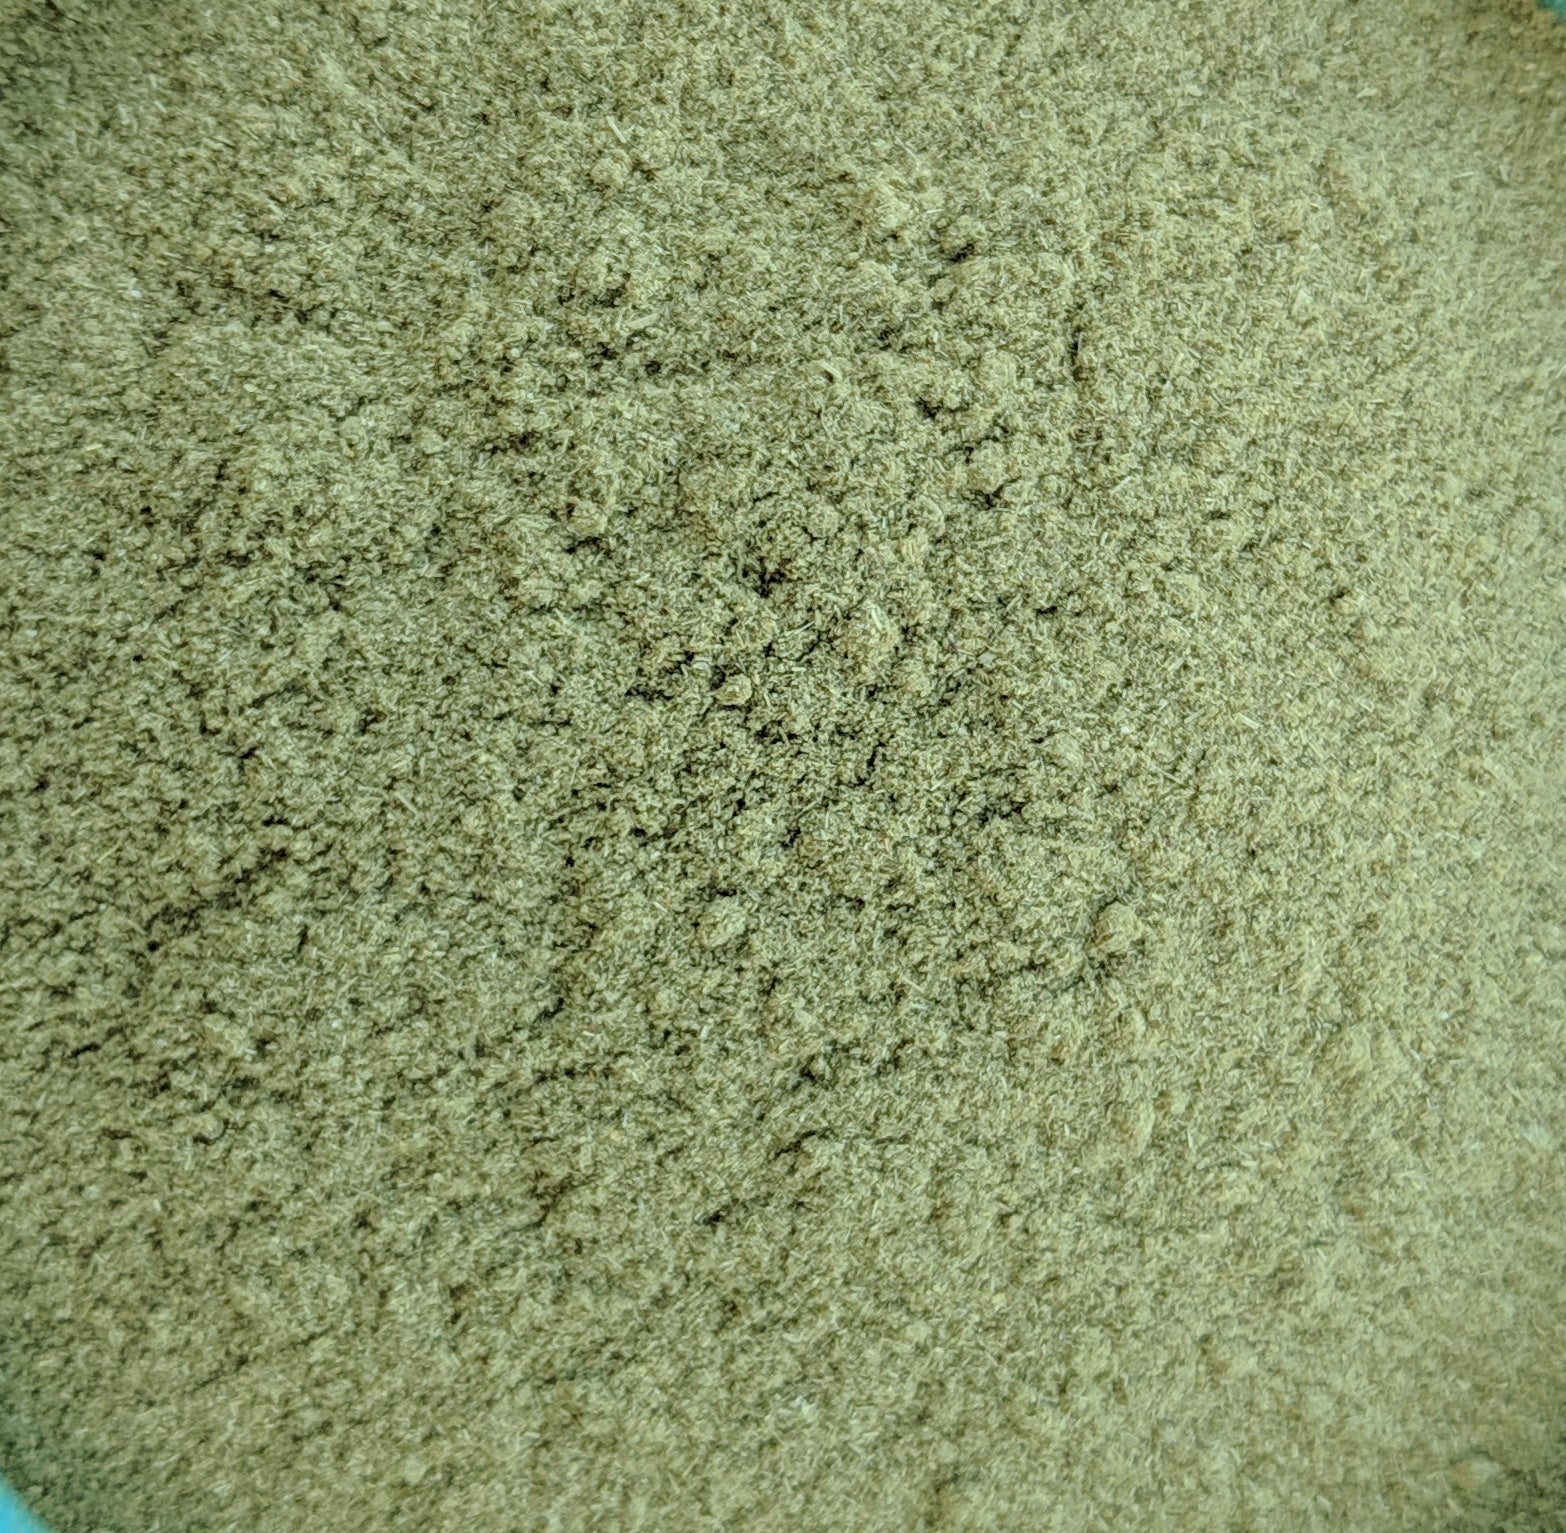 Wheatgrass Powder (Triticum Aestivum)